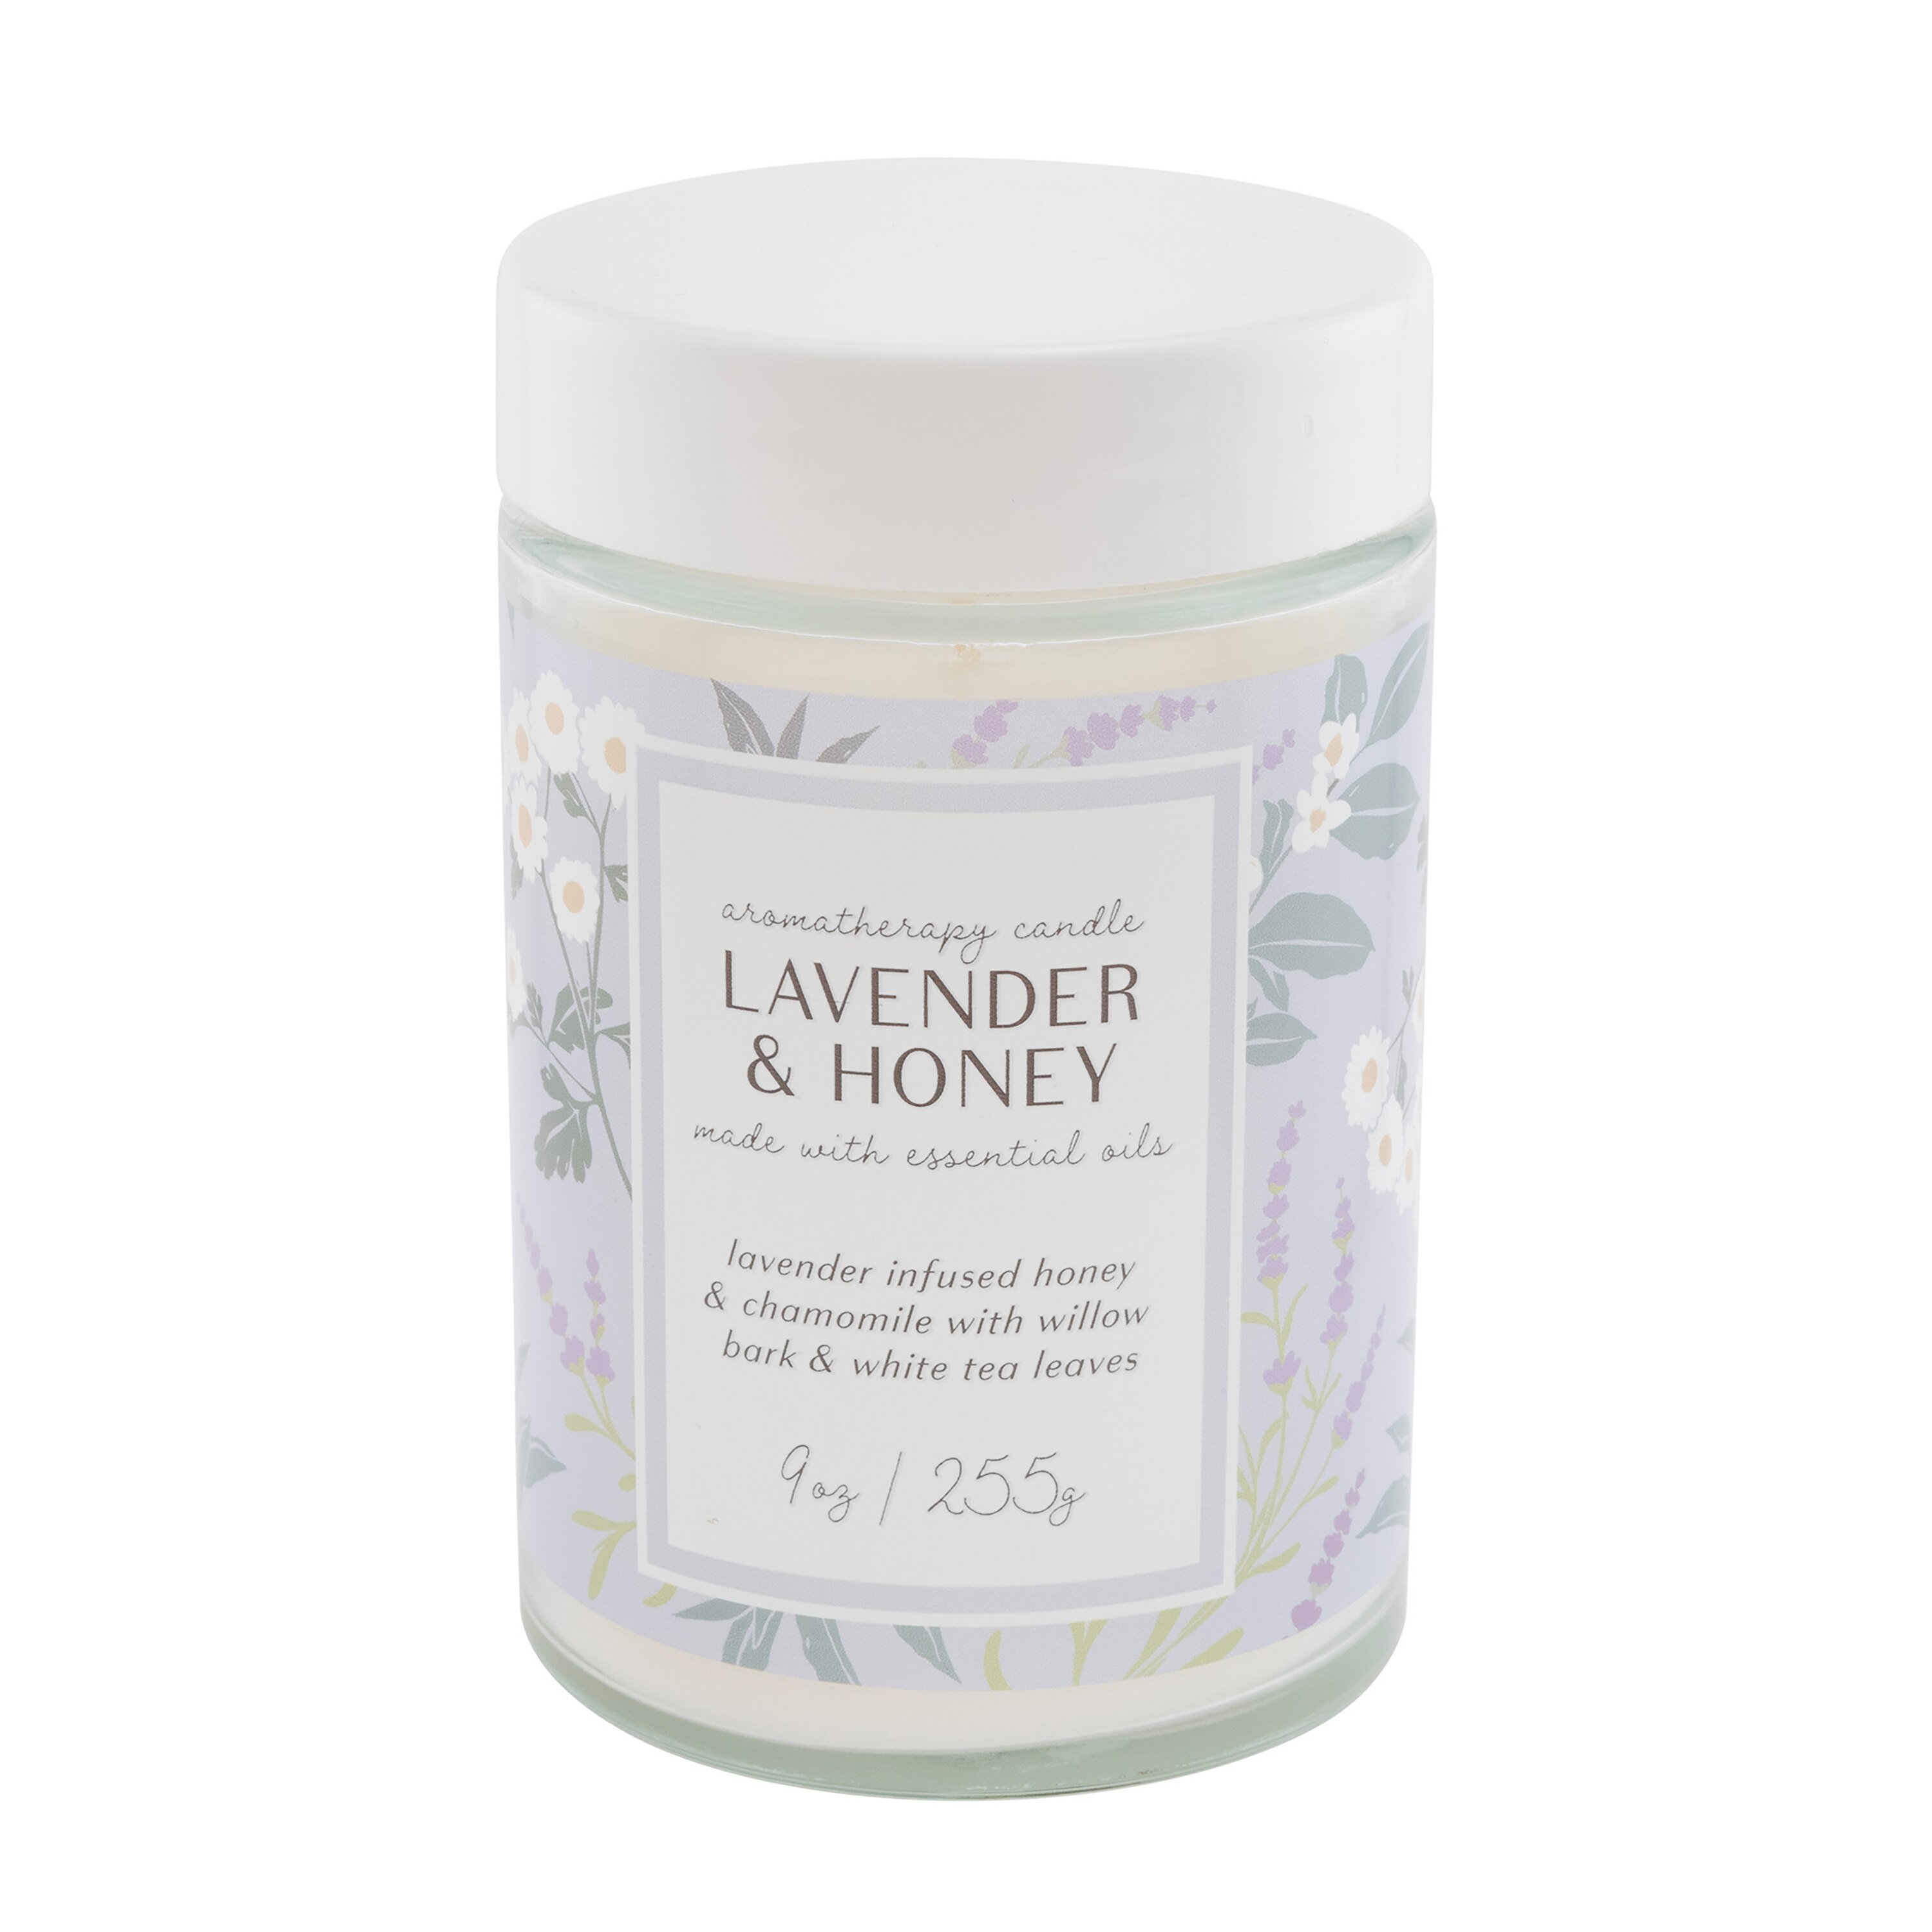 Northern Lights Aromatherapy Candle Lavender & Honey - 9 Oz , CVS